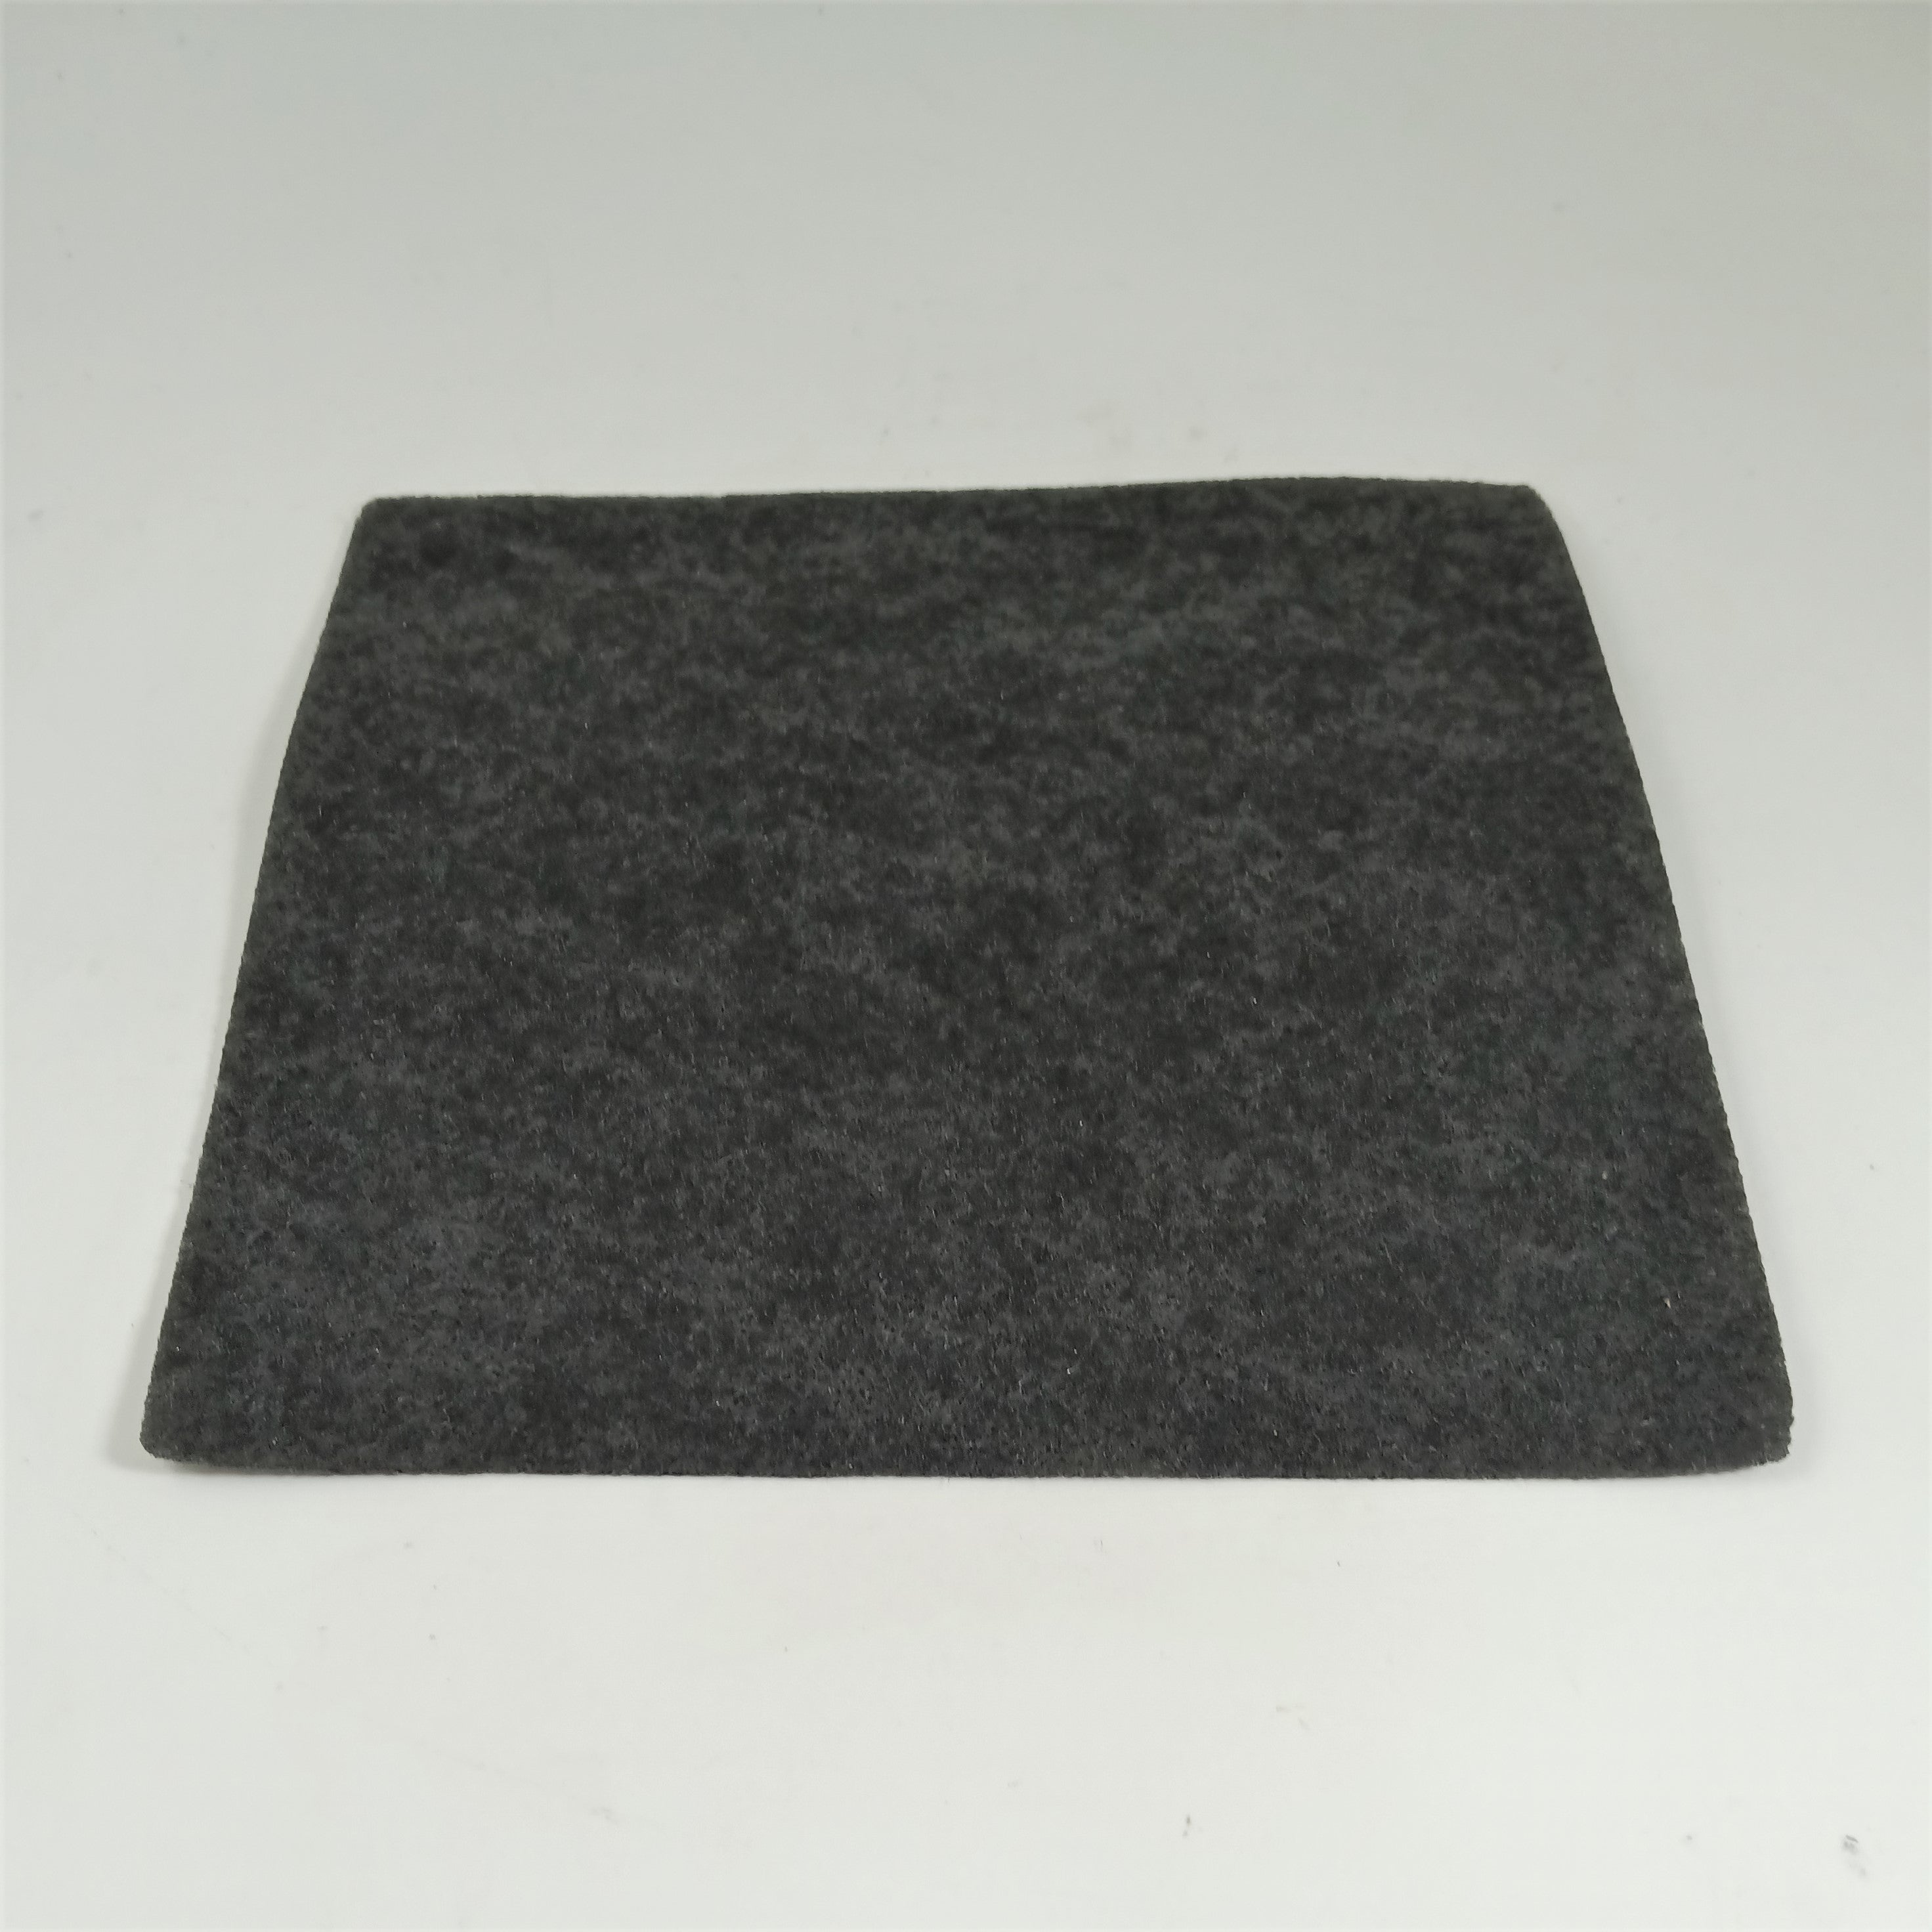 6 Black Square Felt Pad non-adhesive